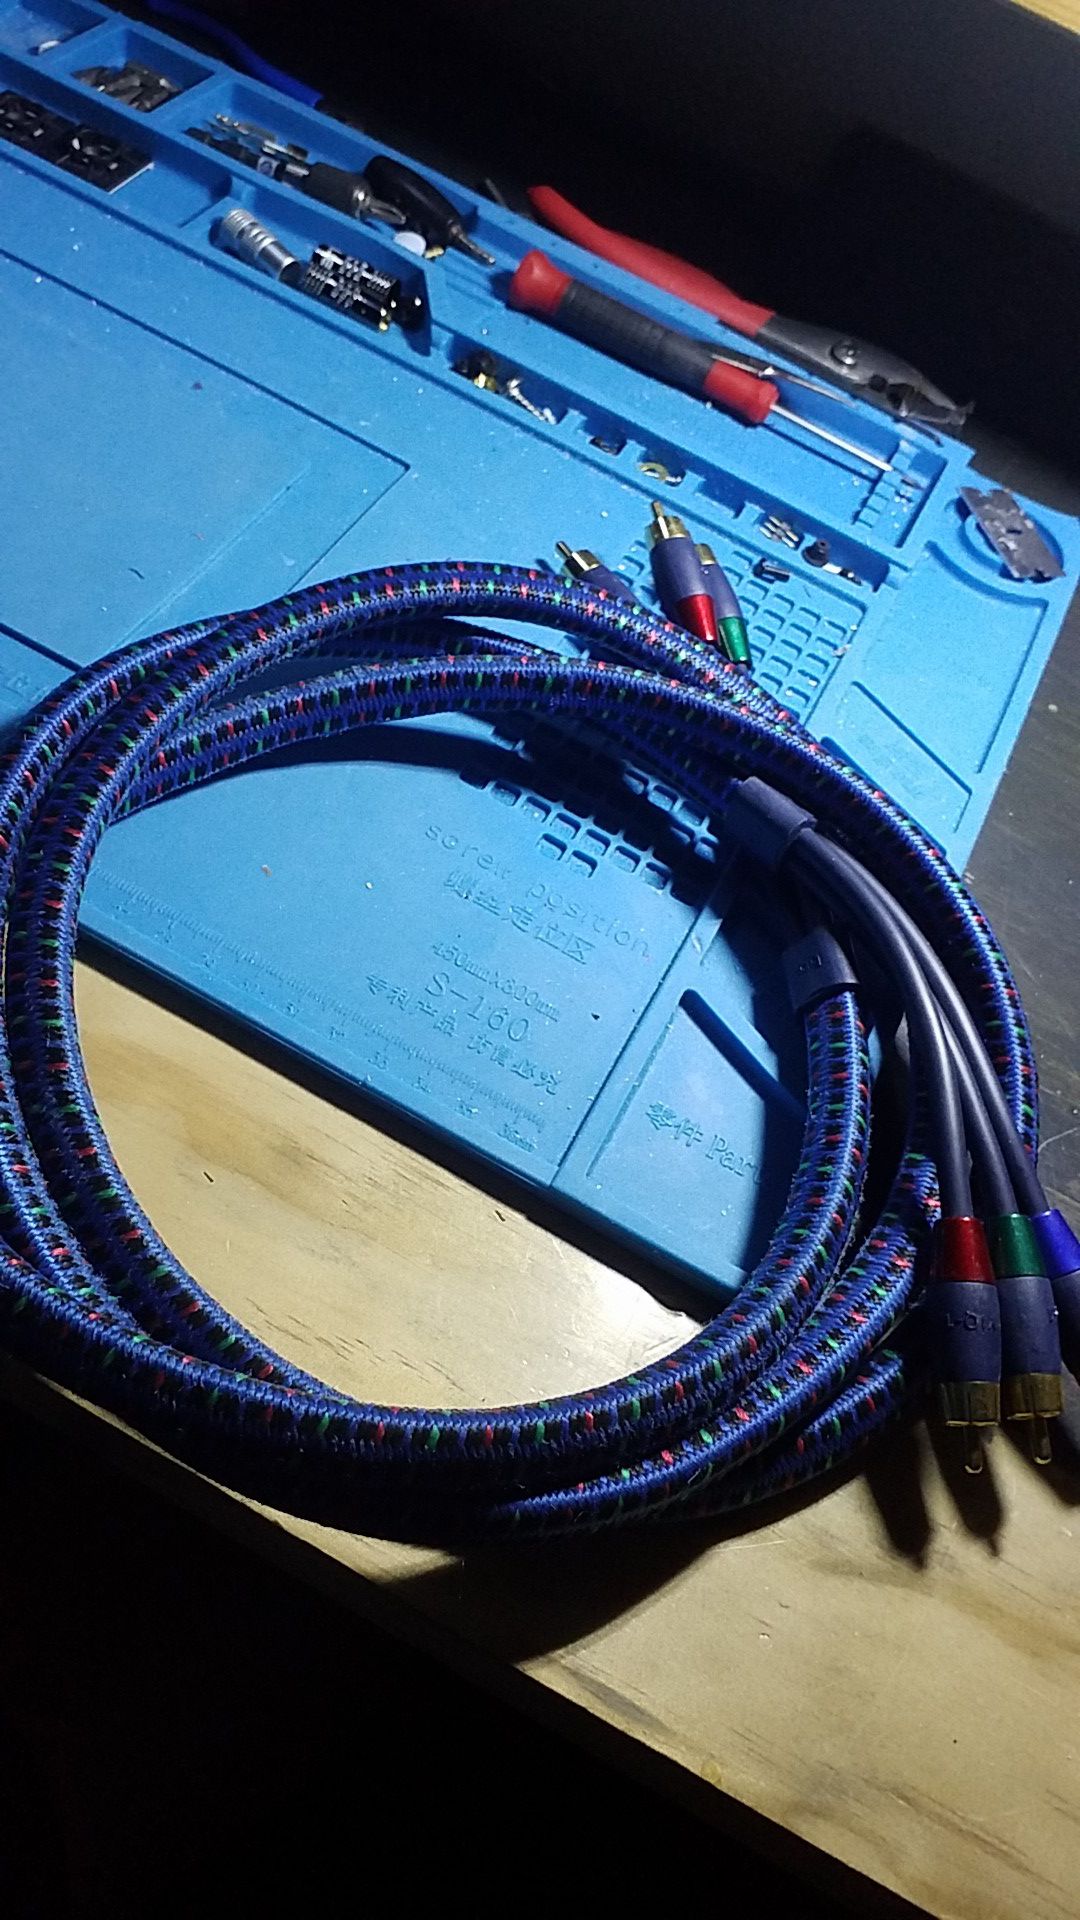 Audioquest cable